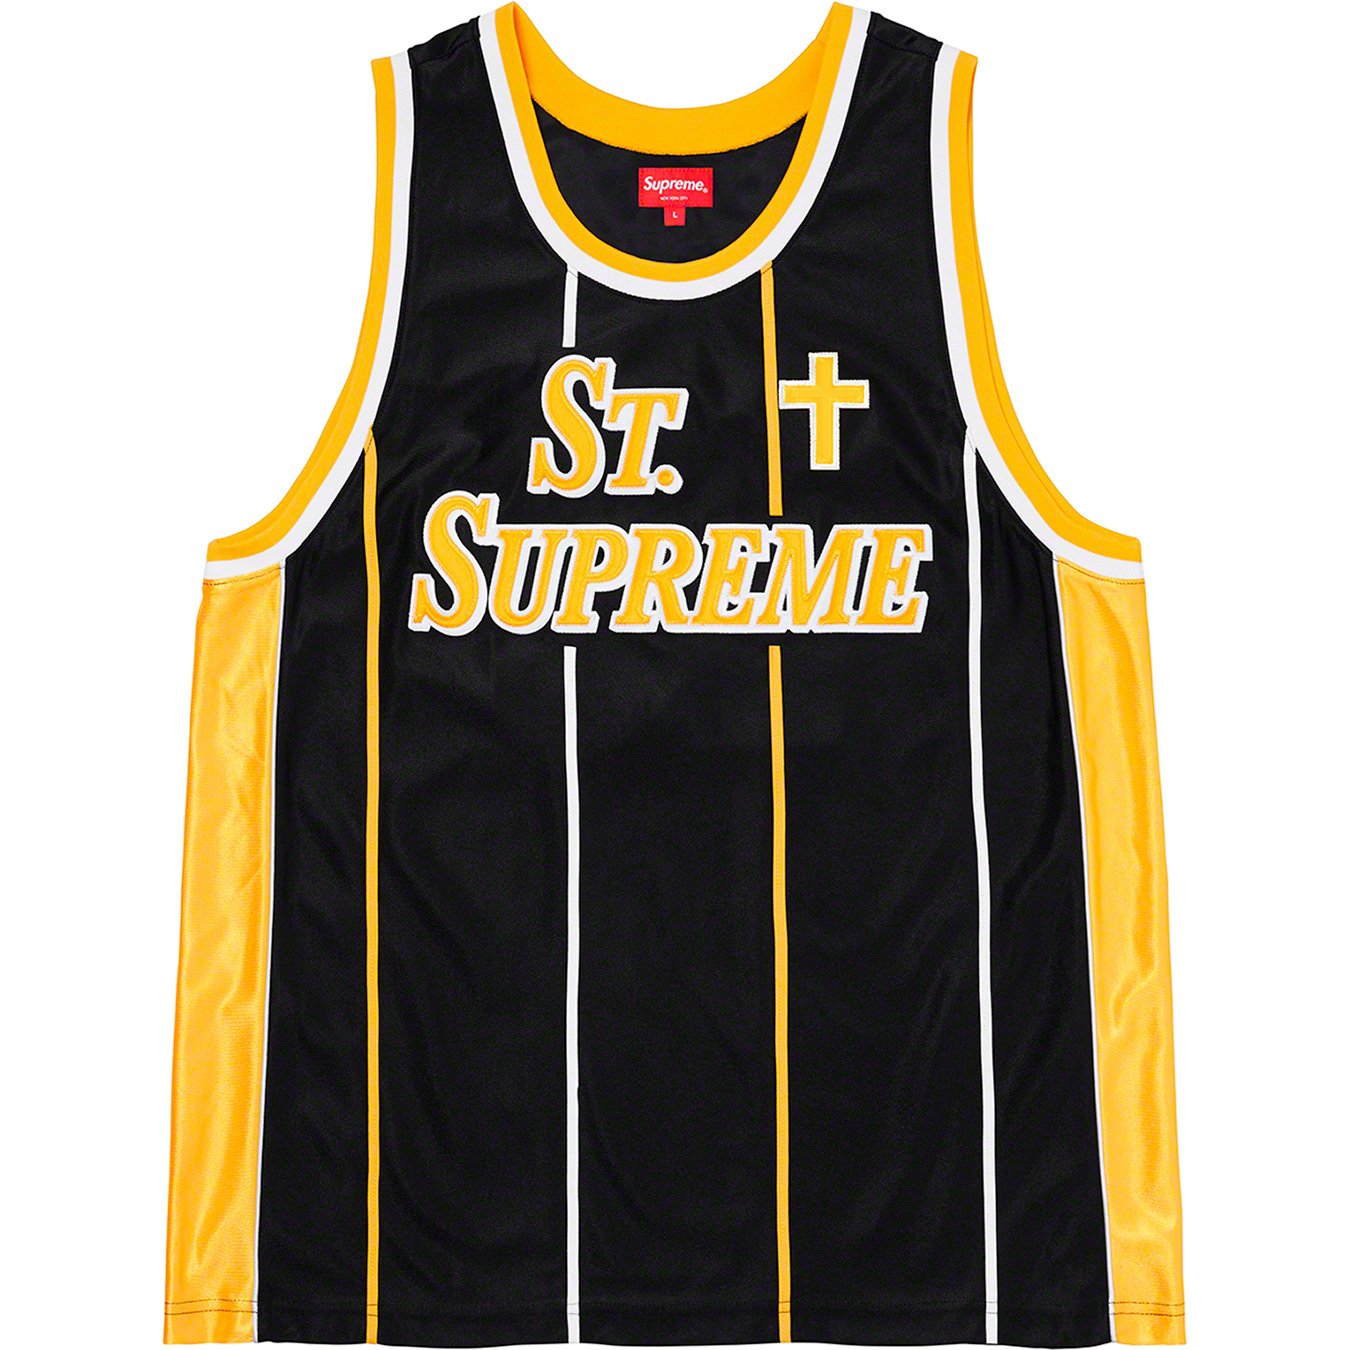 St. Basketball Jersey - spring summer 2020 - Supreme